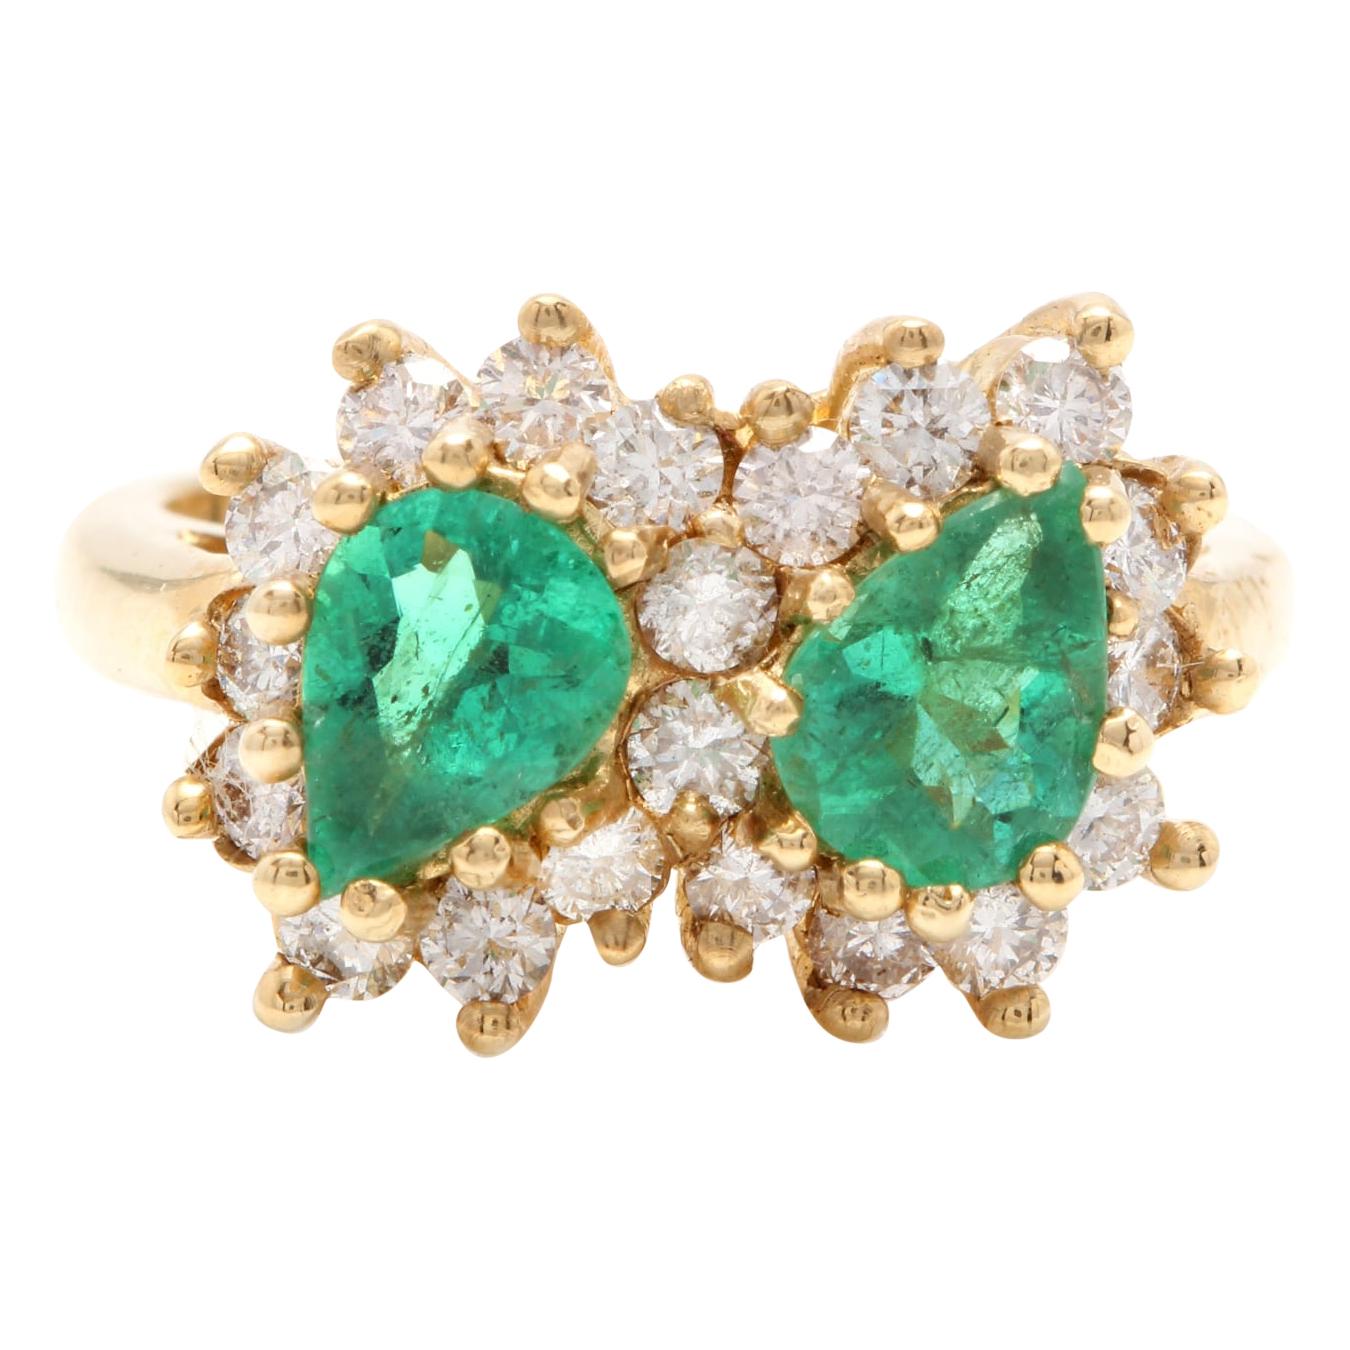 2.70 Carat Natural Emerald and Diamond 14 Karat Solid White Gold Ring